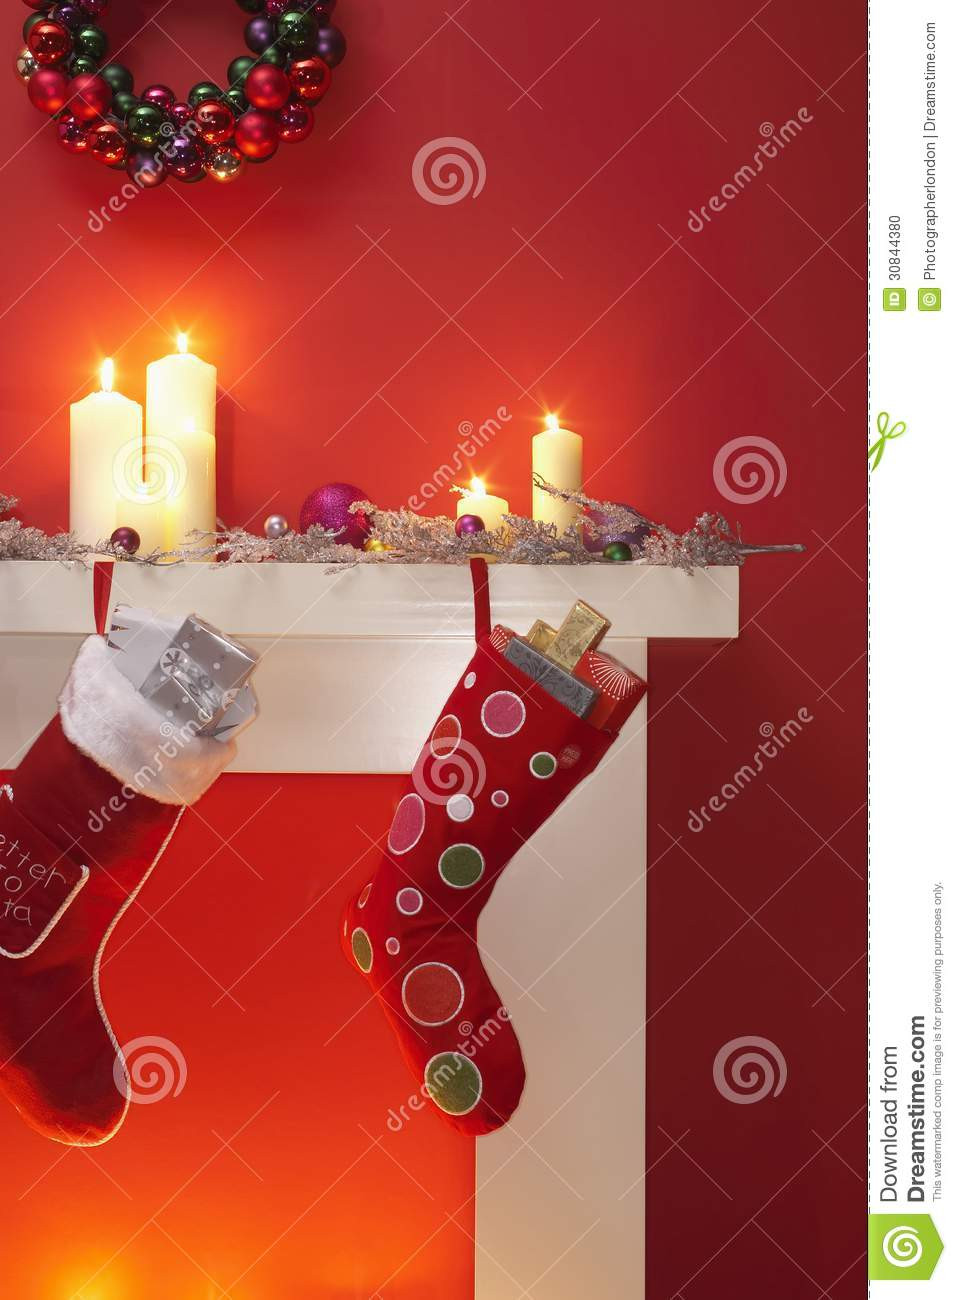 Christmas Stockings Hanging Over Fireplace
 Christmas Stockings Hanging Over Fireplace Stock